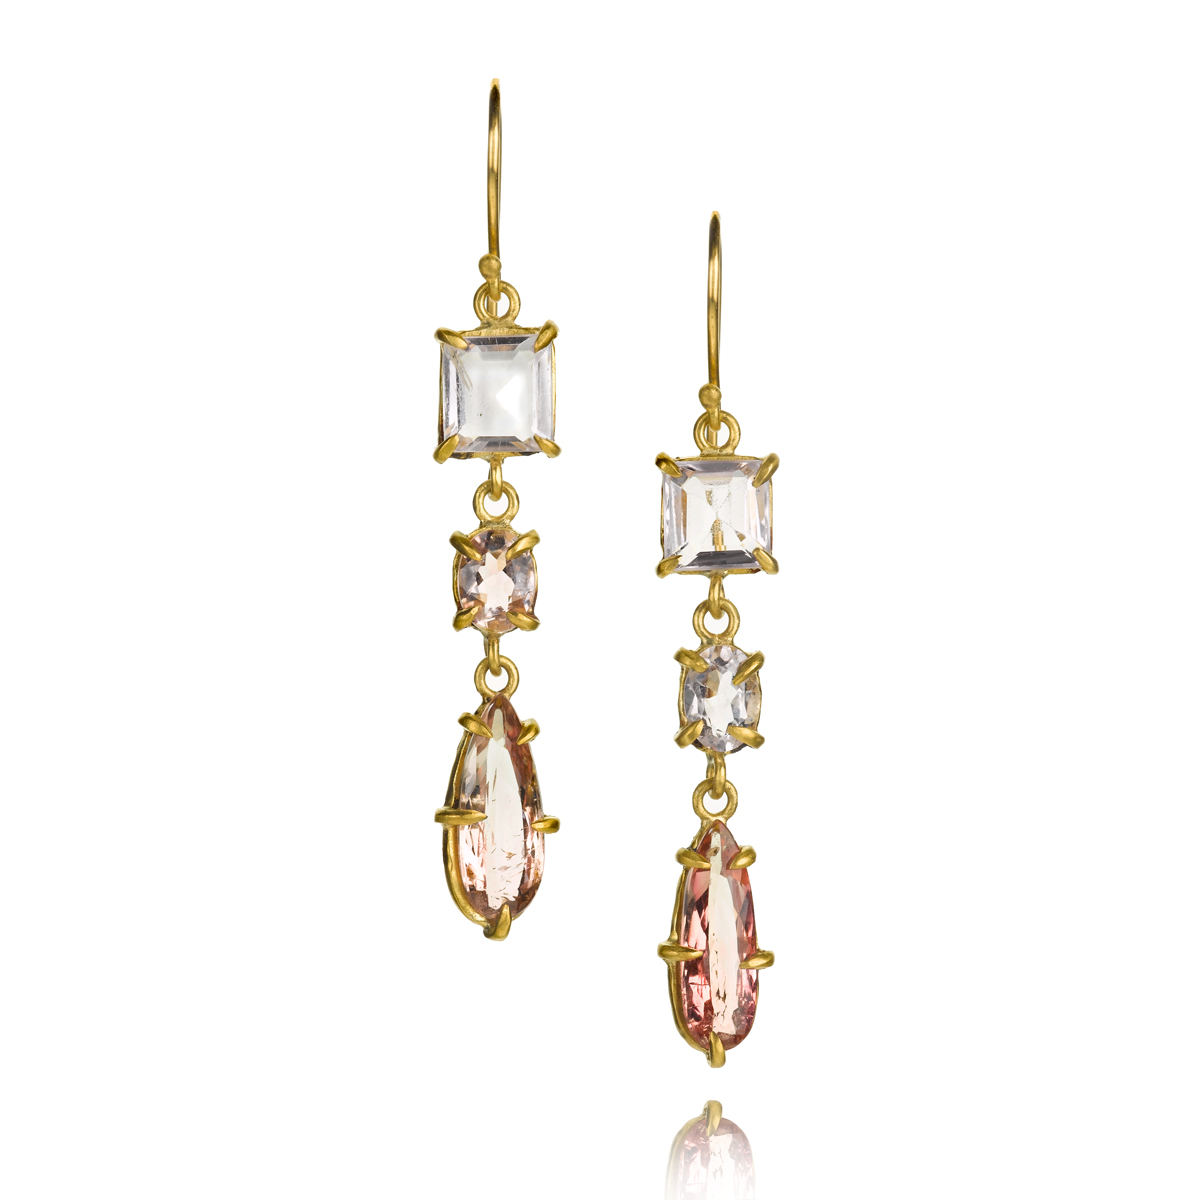  22k gold earrings with tourmaline, morganite and kunzite,&nbsp;$2,765. 